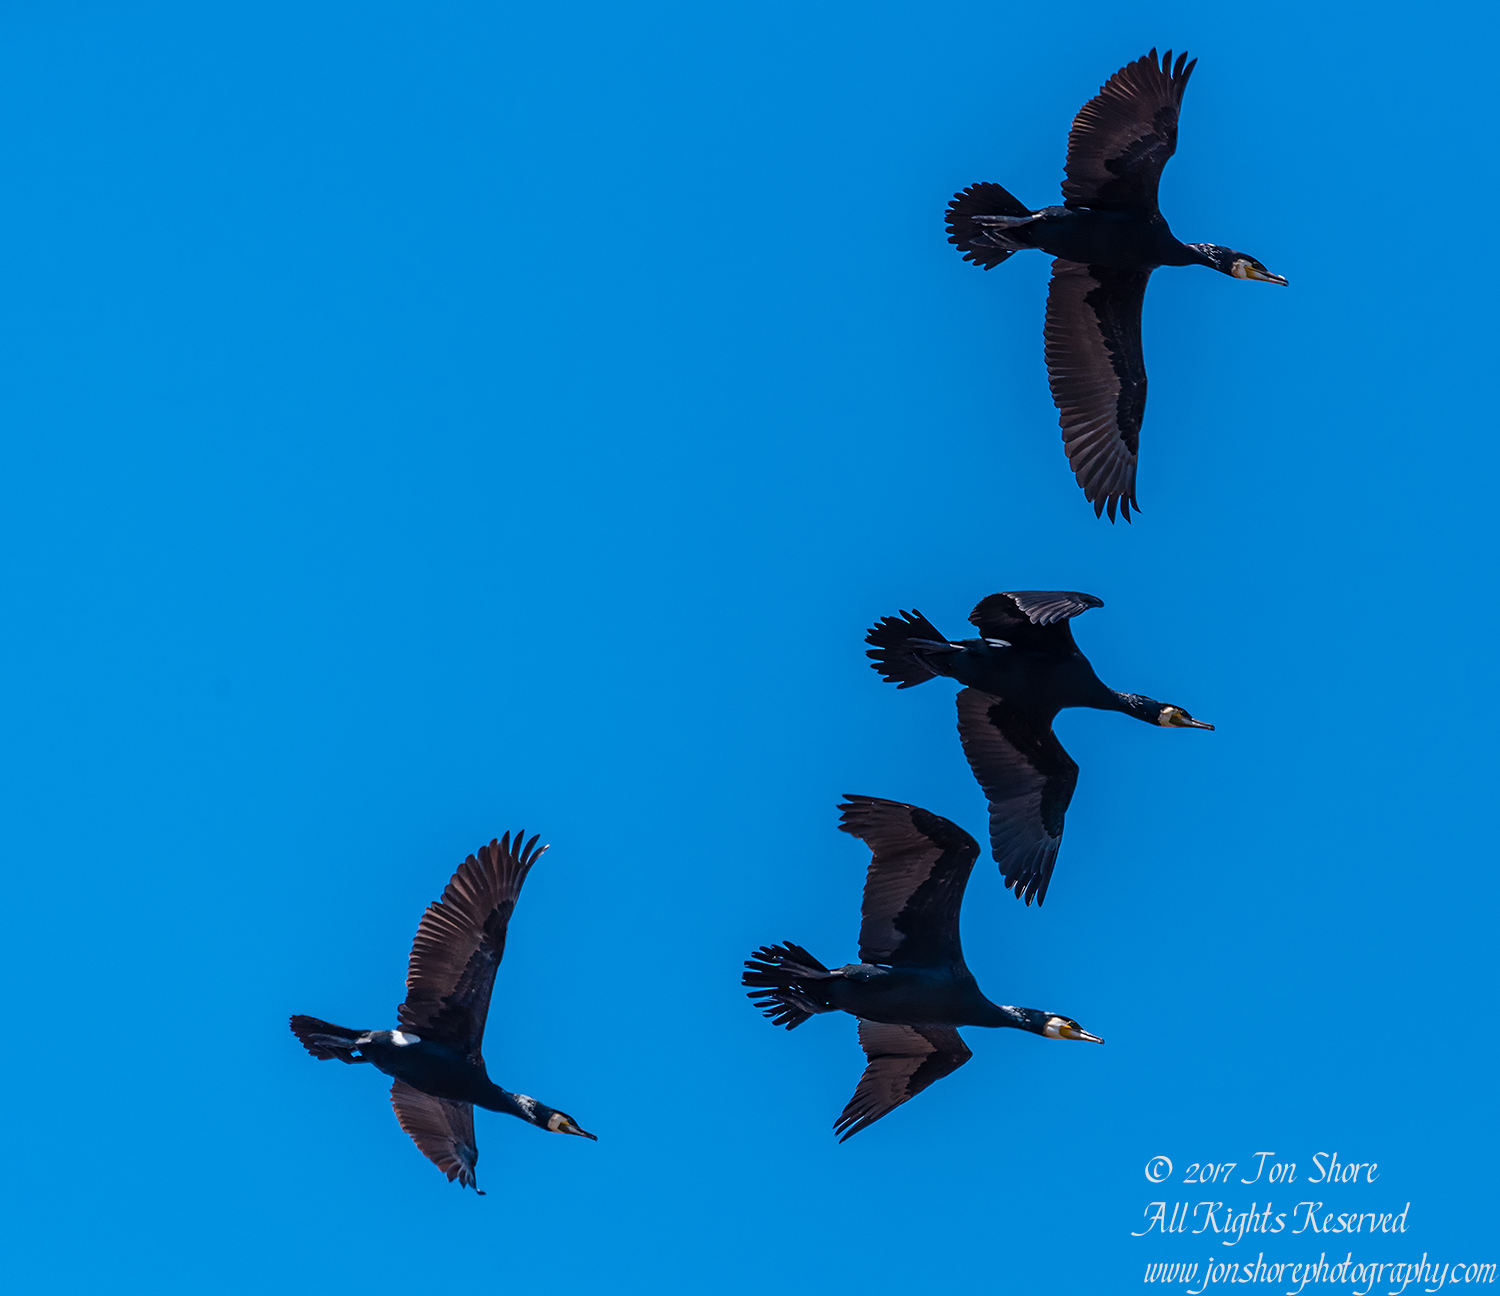 Great Black Cormorants Latvia. Tamron 600mm